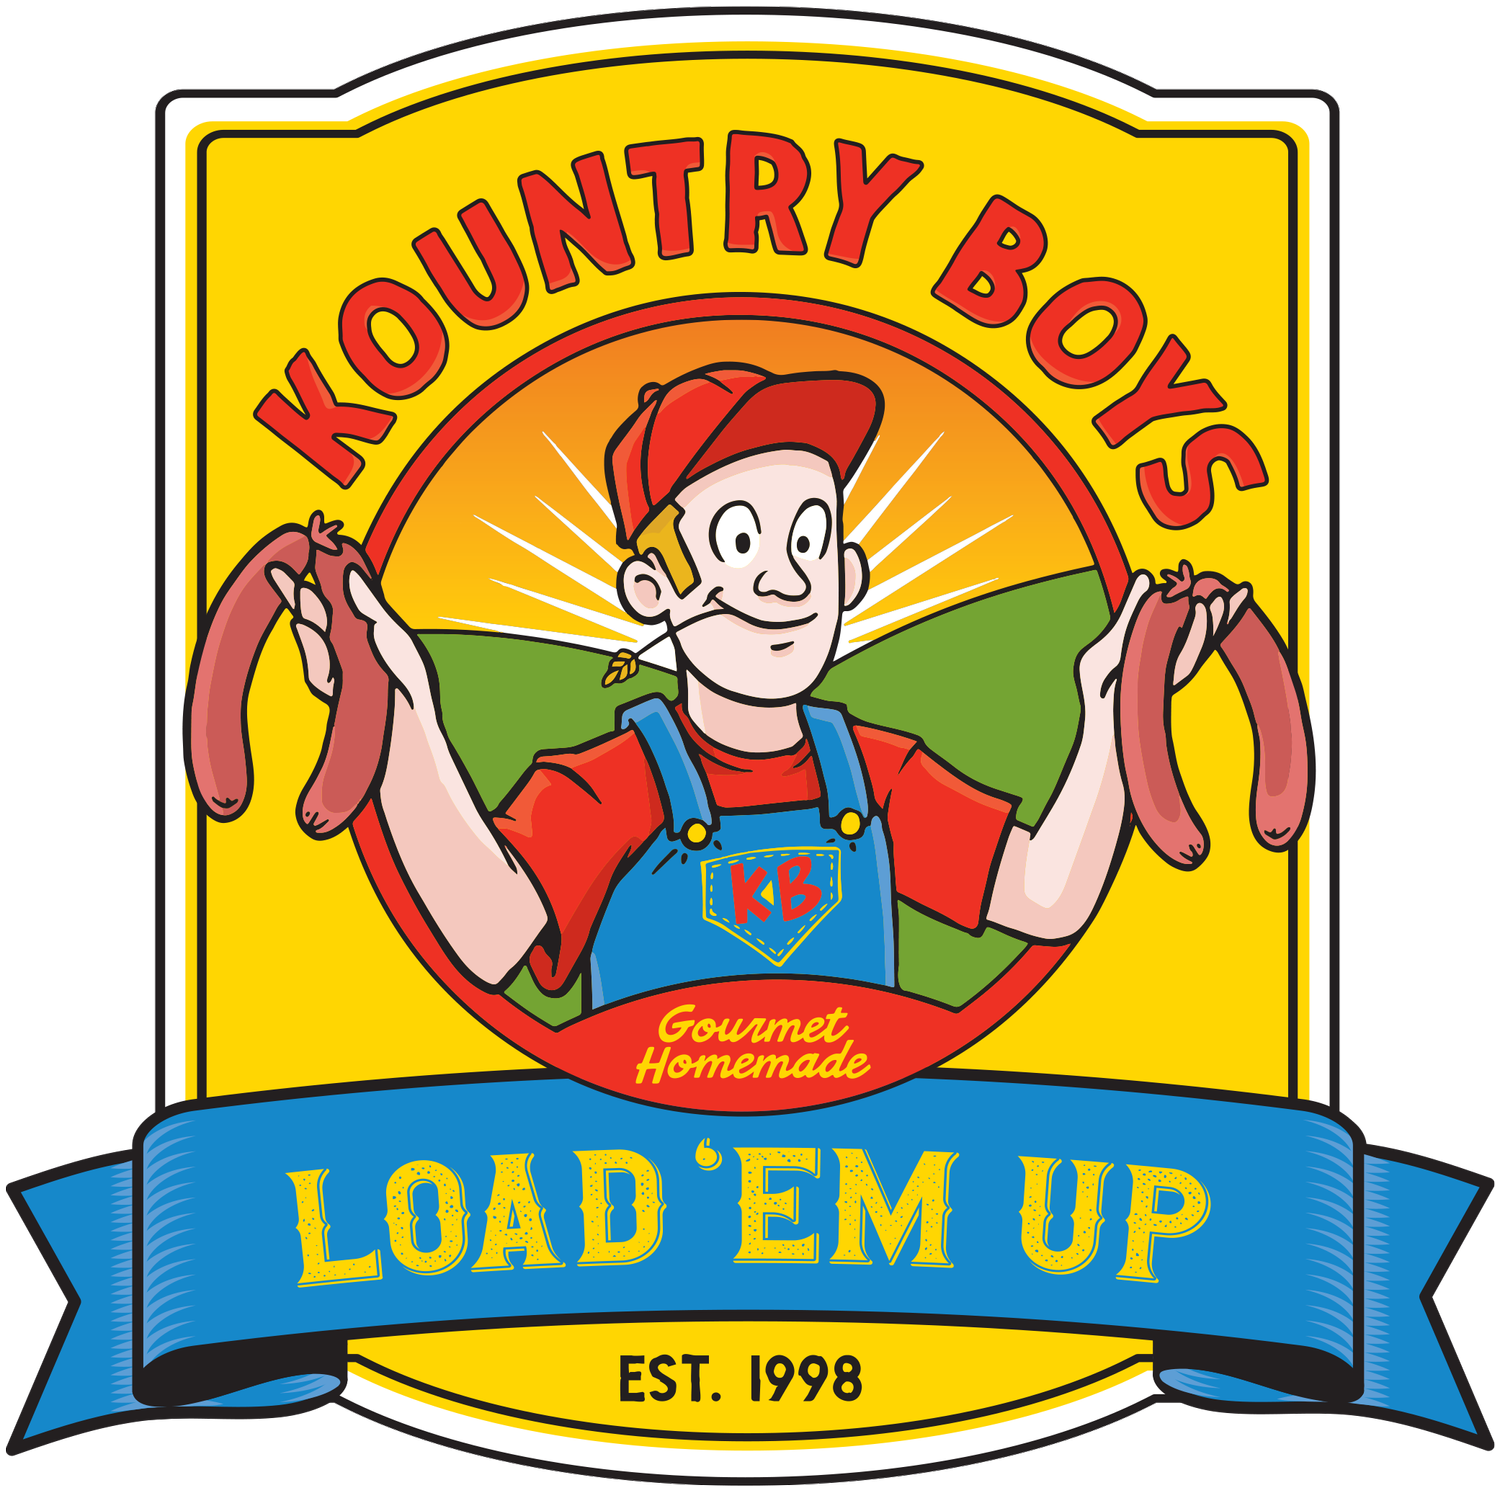 Kountry Boys Shop Site 